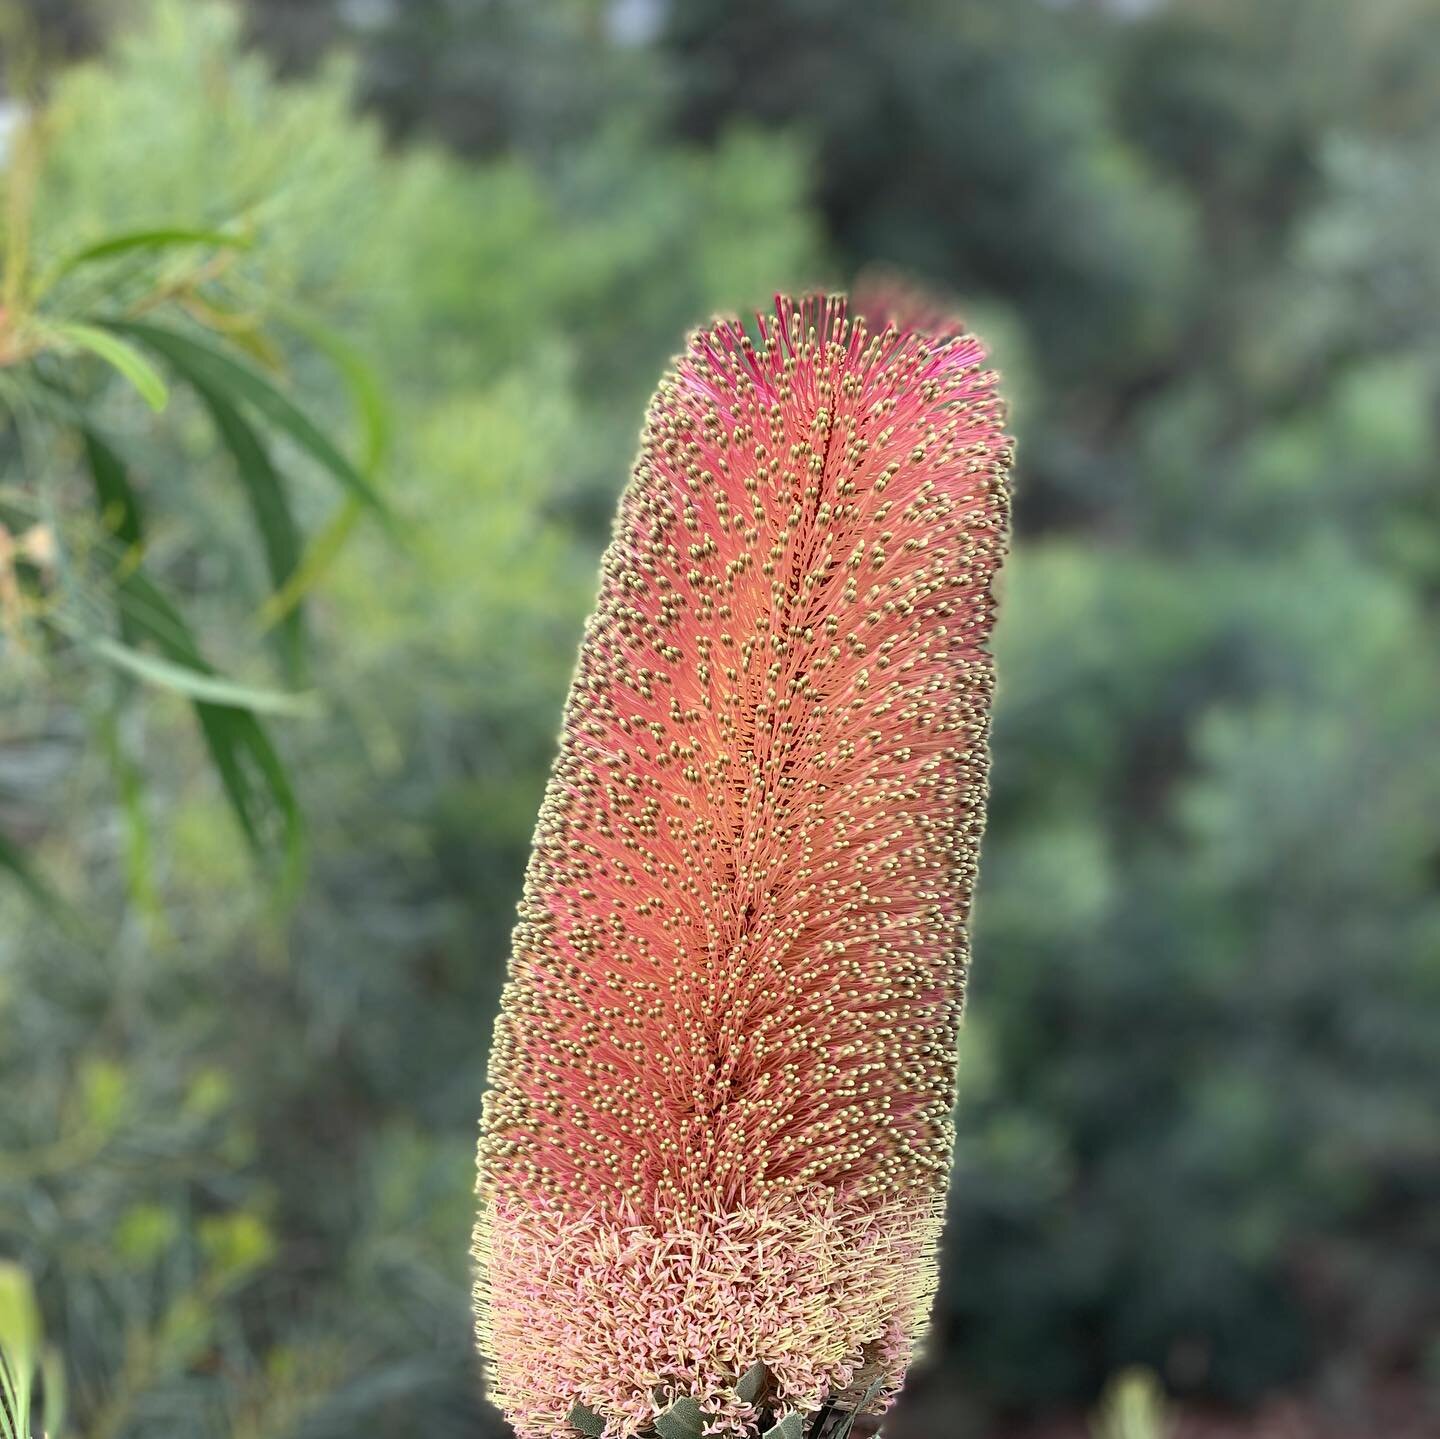 Nature fix 💚  #banksiaflower 
.
.
.
.
#stressrelief #naturecures #moodboost #nativeaustralianflowers #naturopath #jcnaturopathy